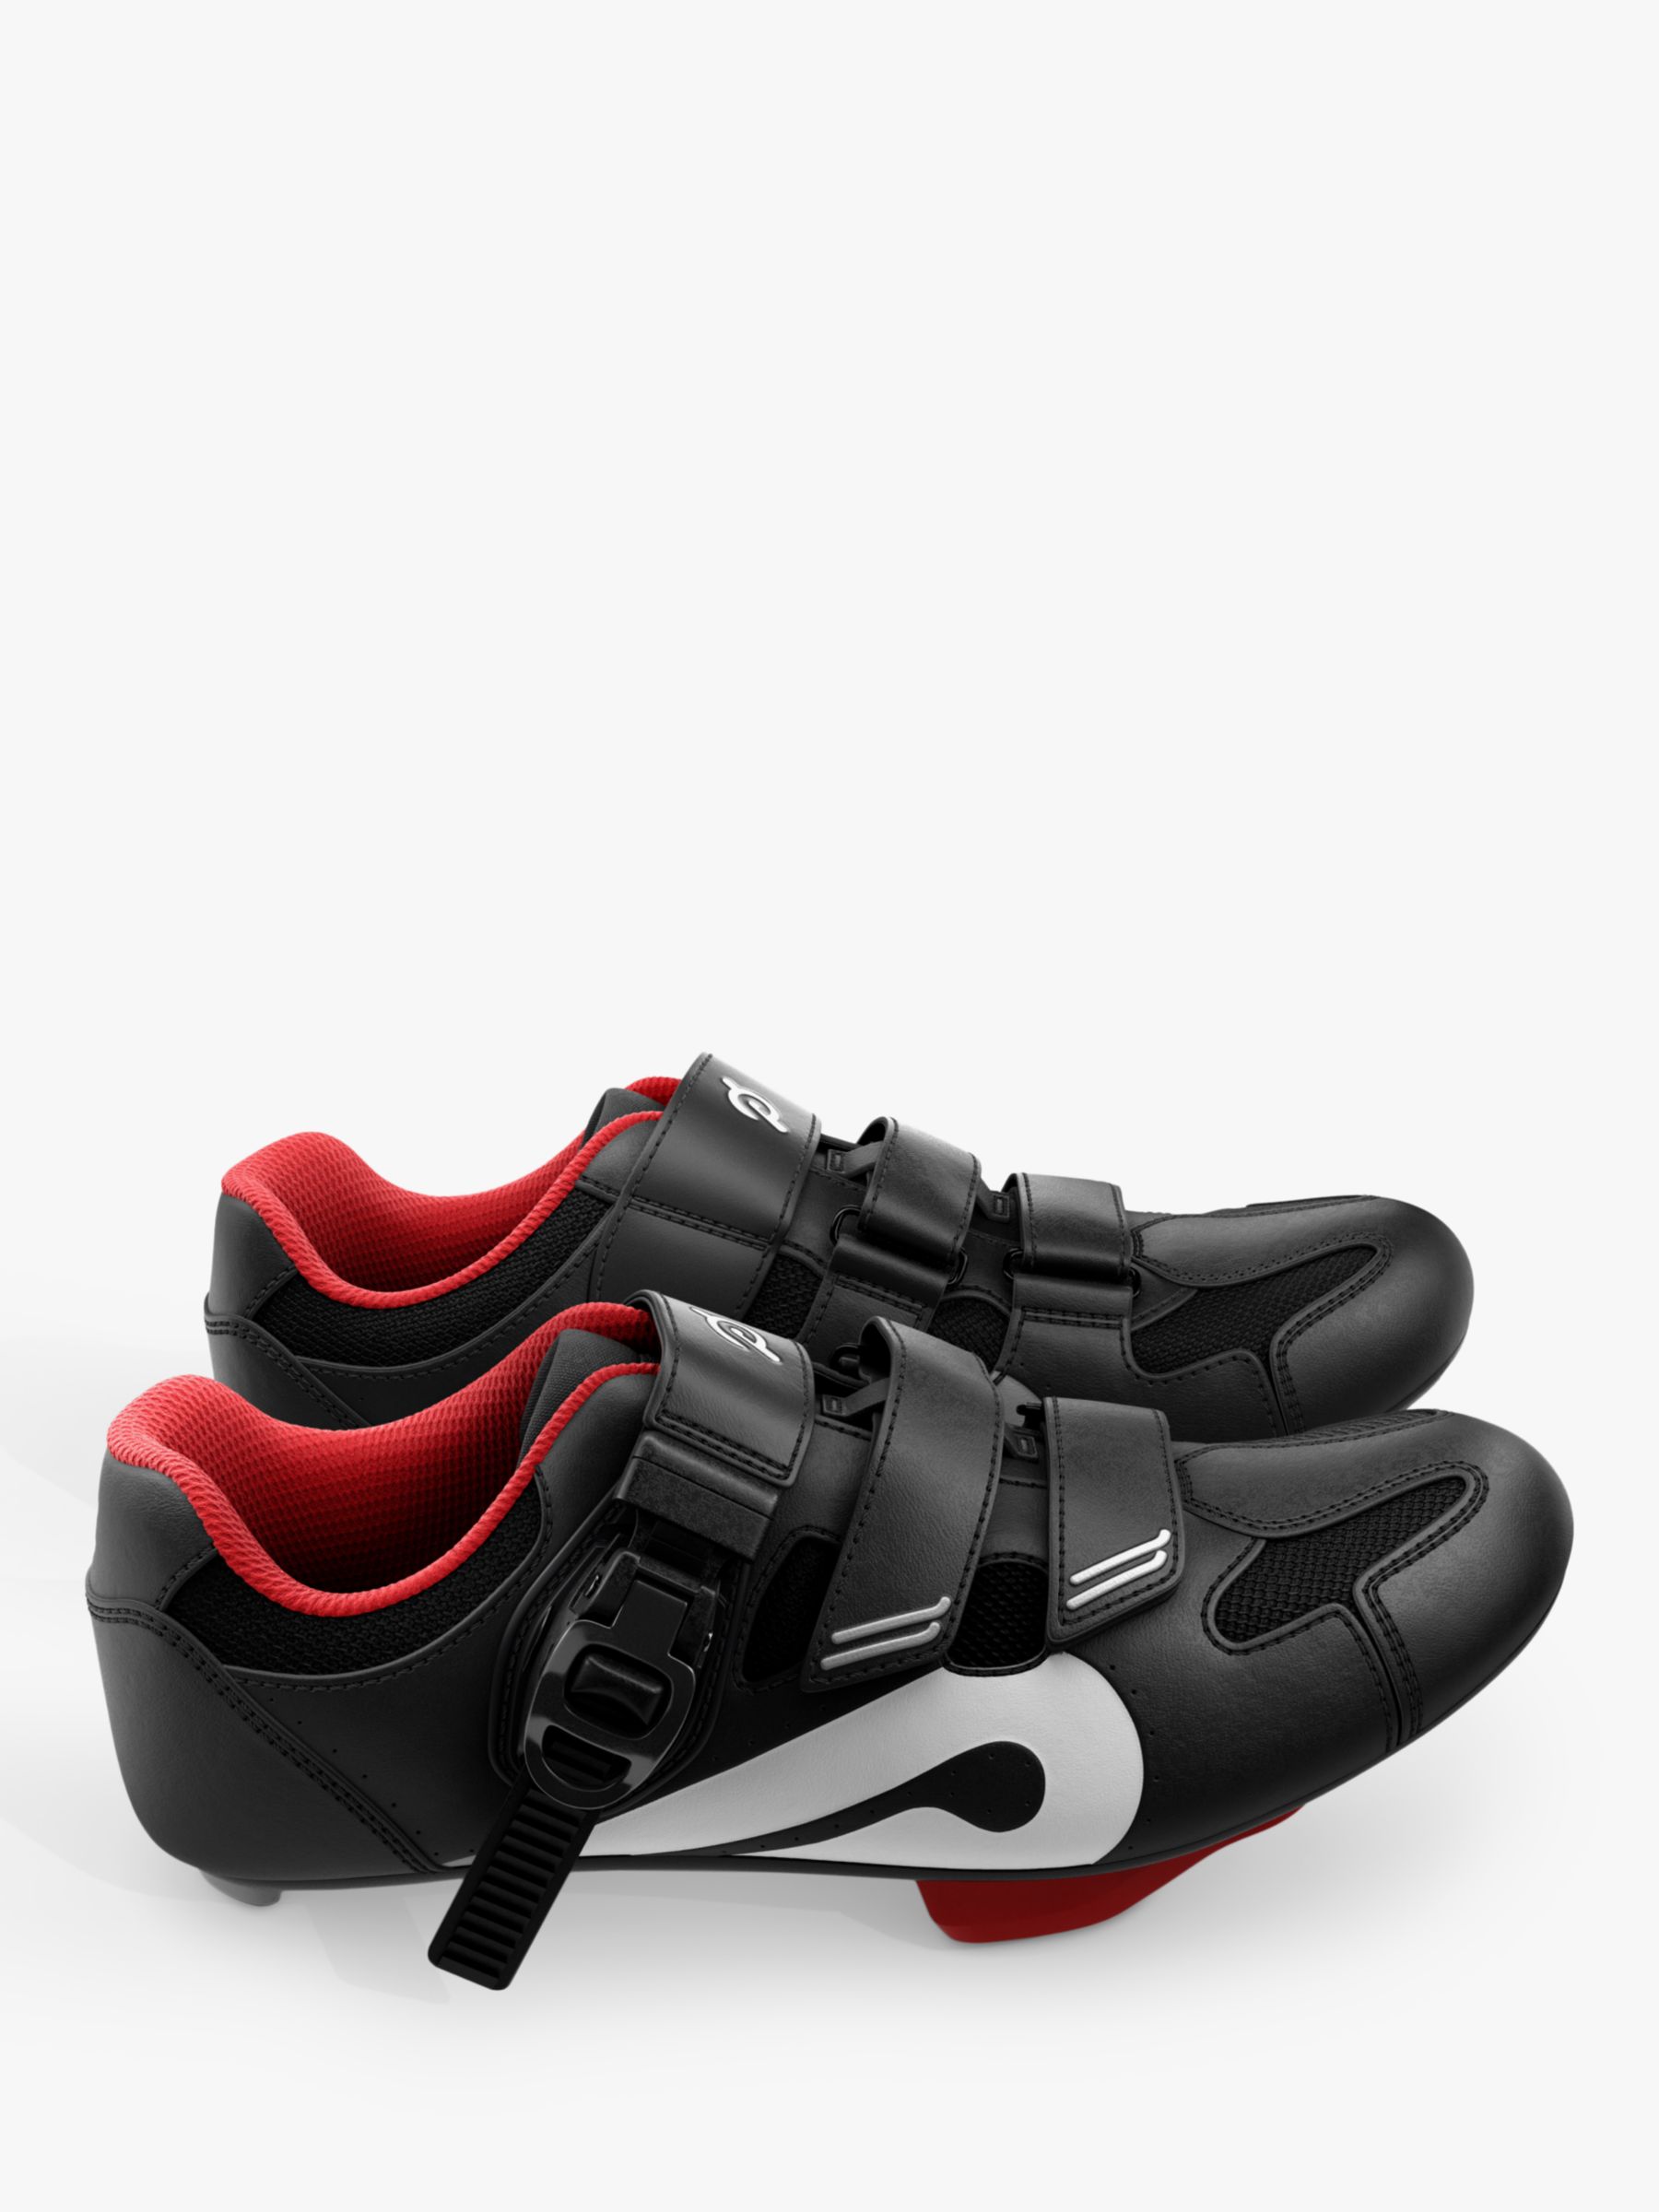 Peloton Cycling Shoes, Black/Red